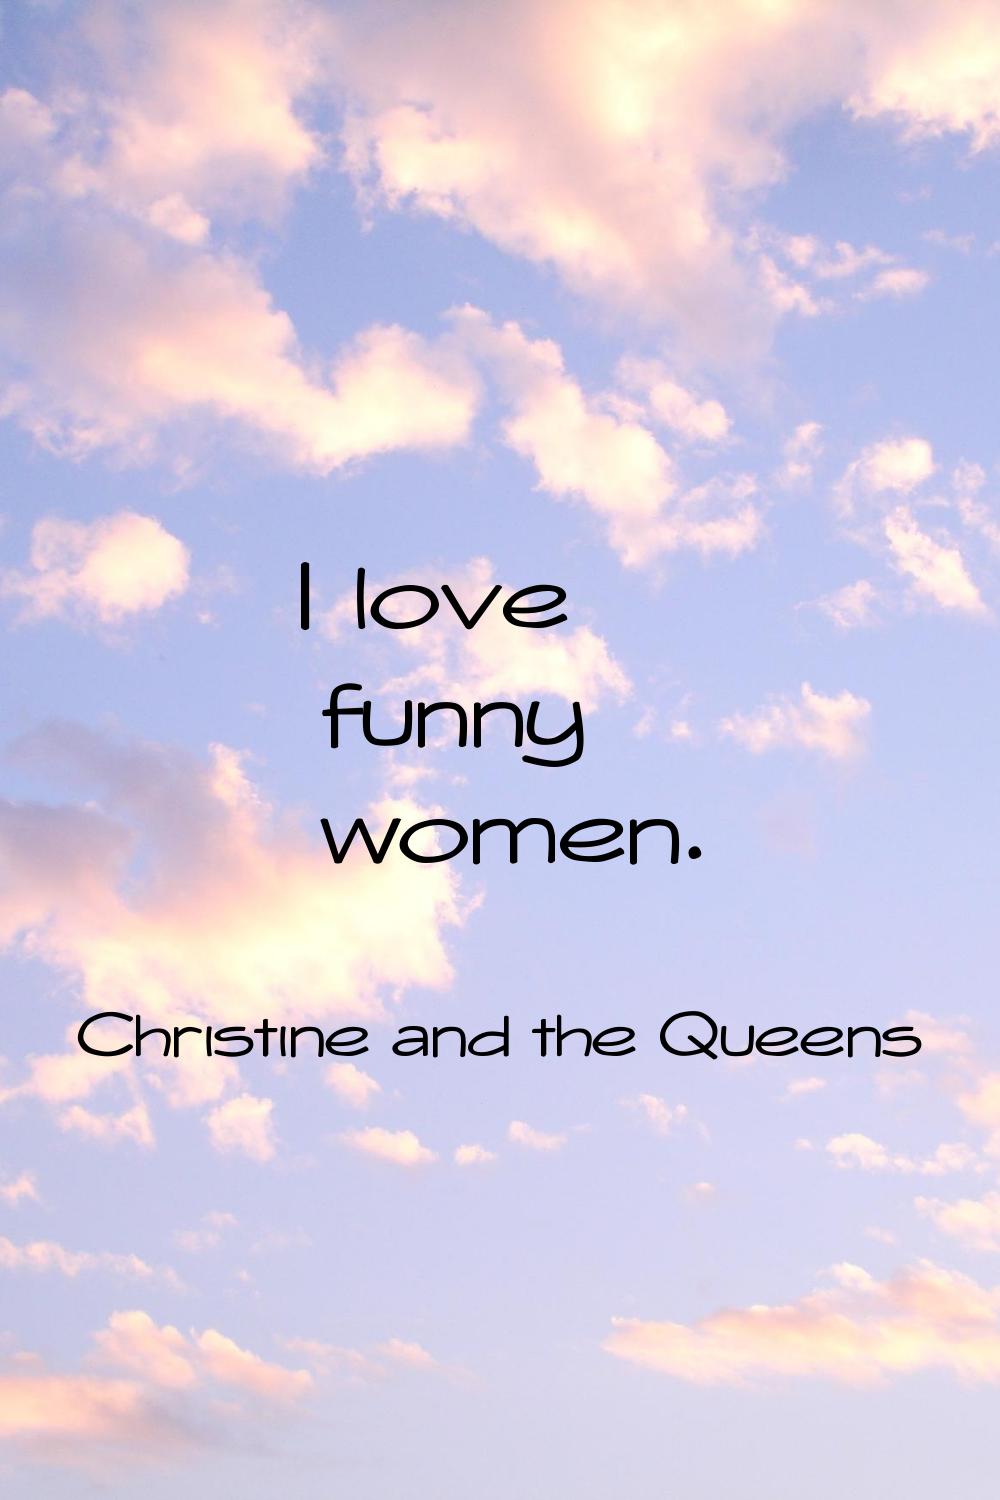 I love funny women.